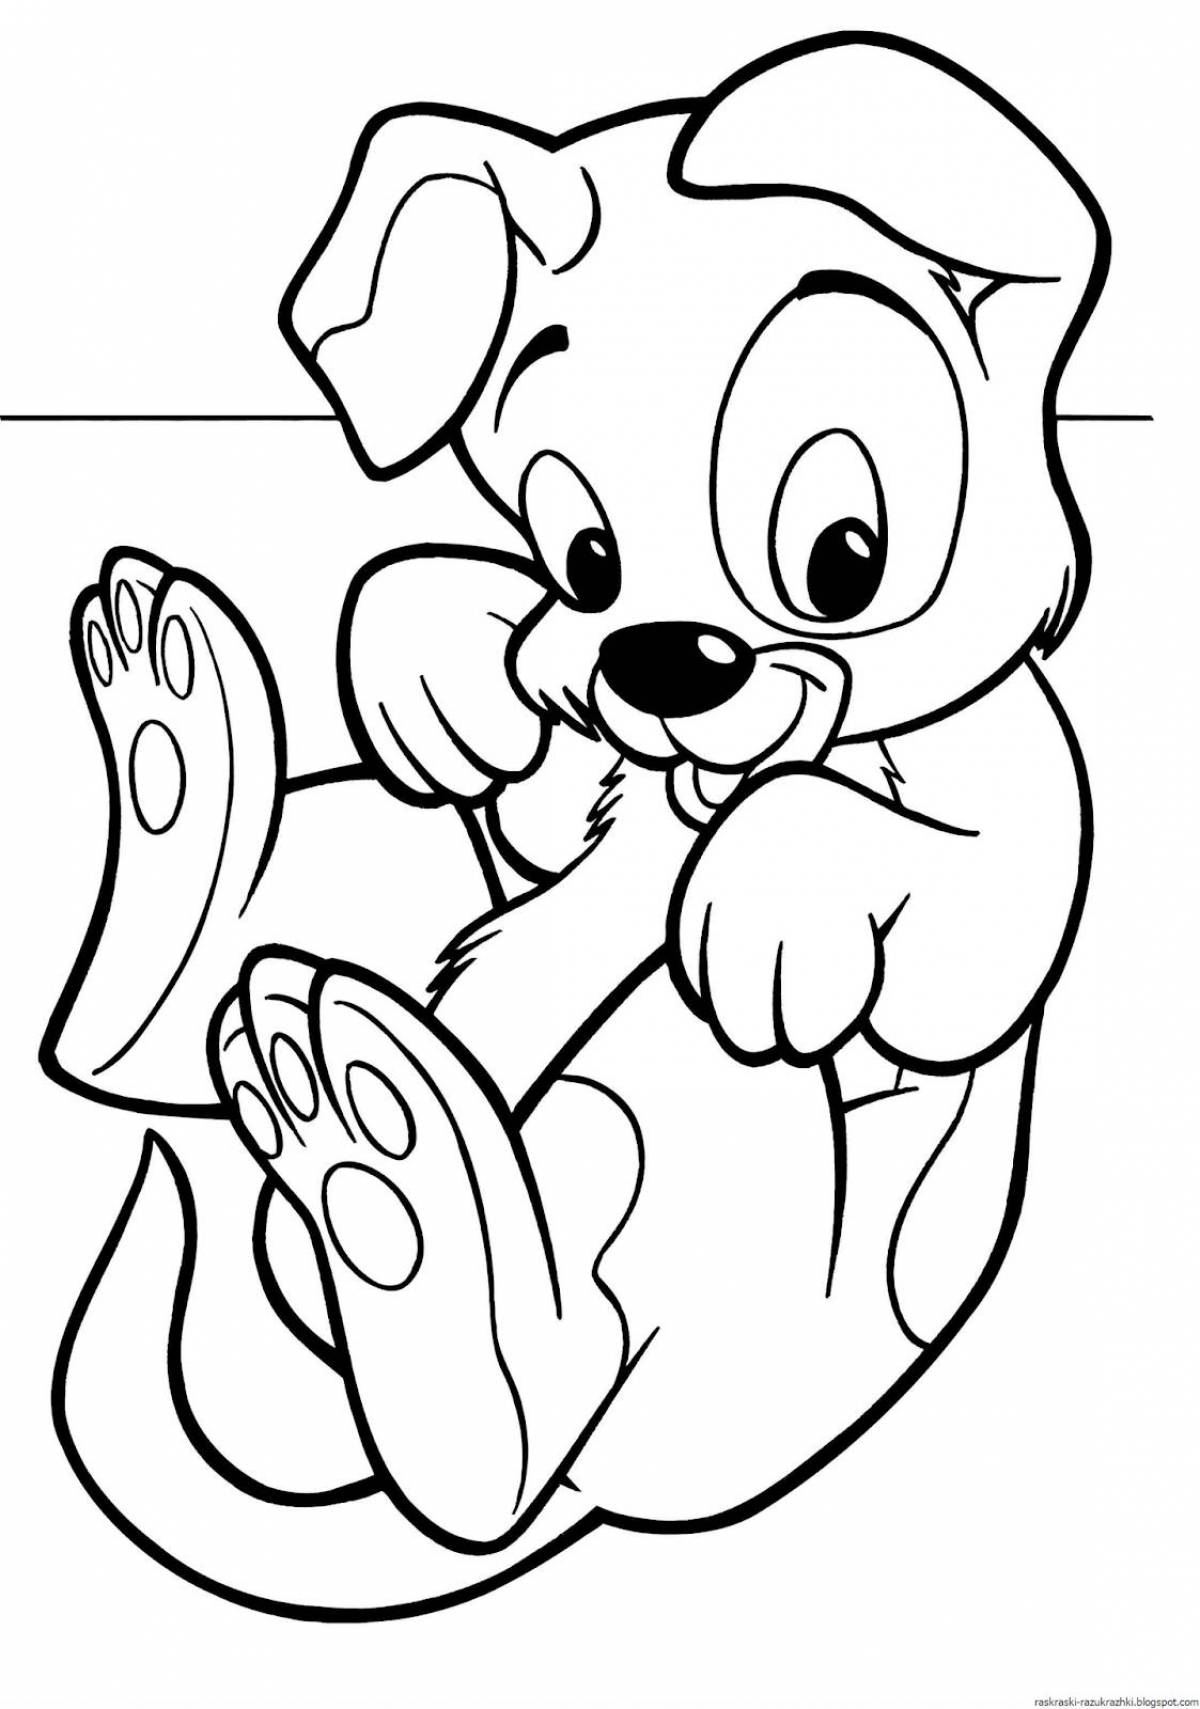 Waggish dog coloring page